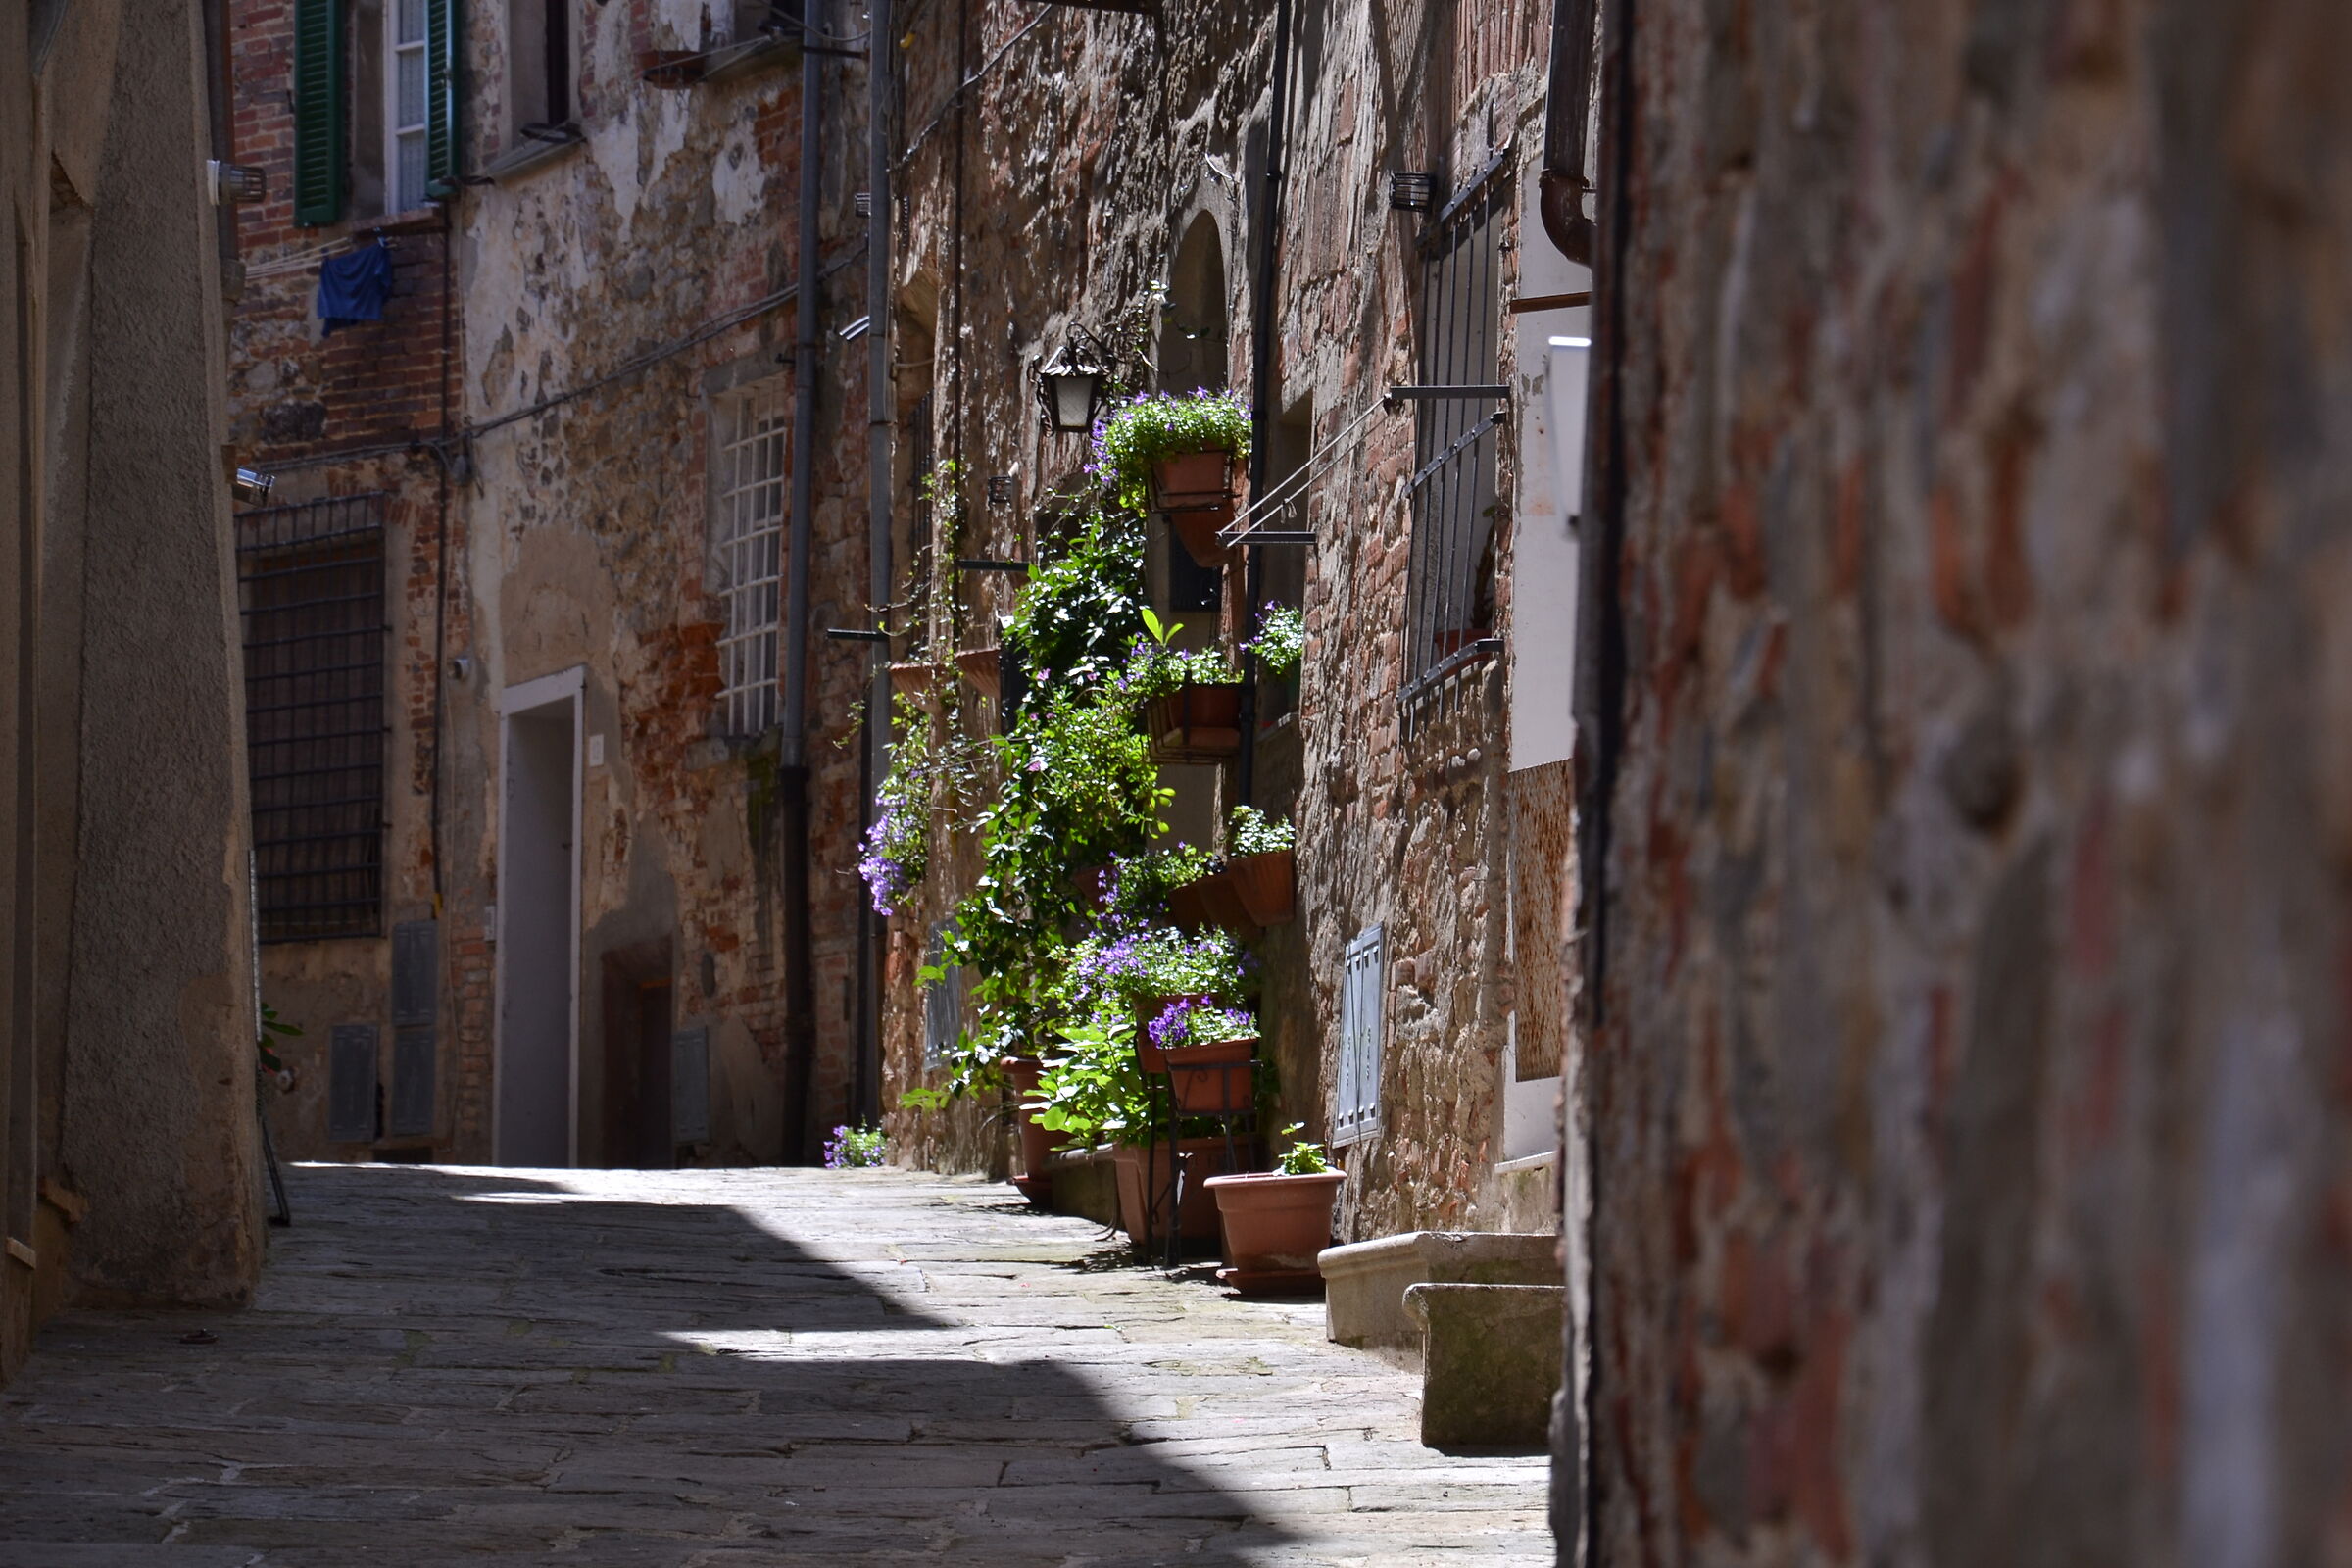 Walking through the alleys of Lucignano...